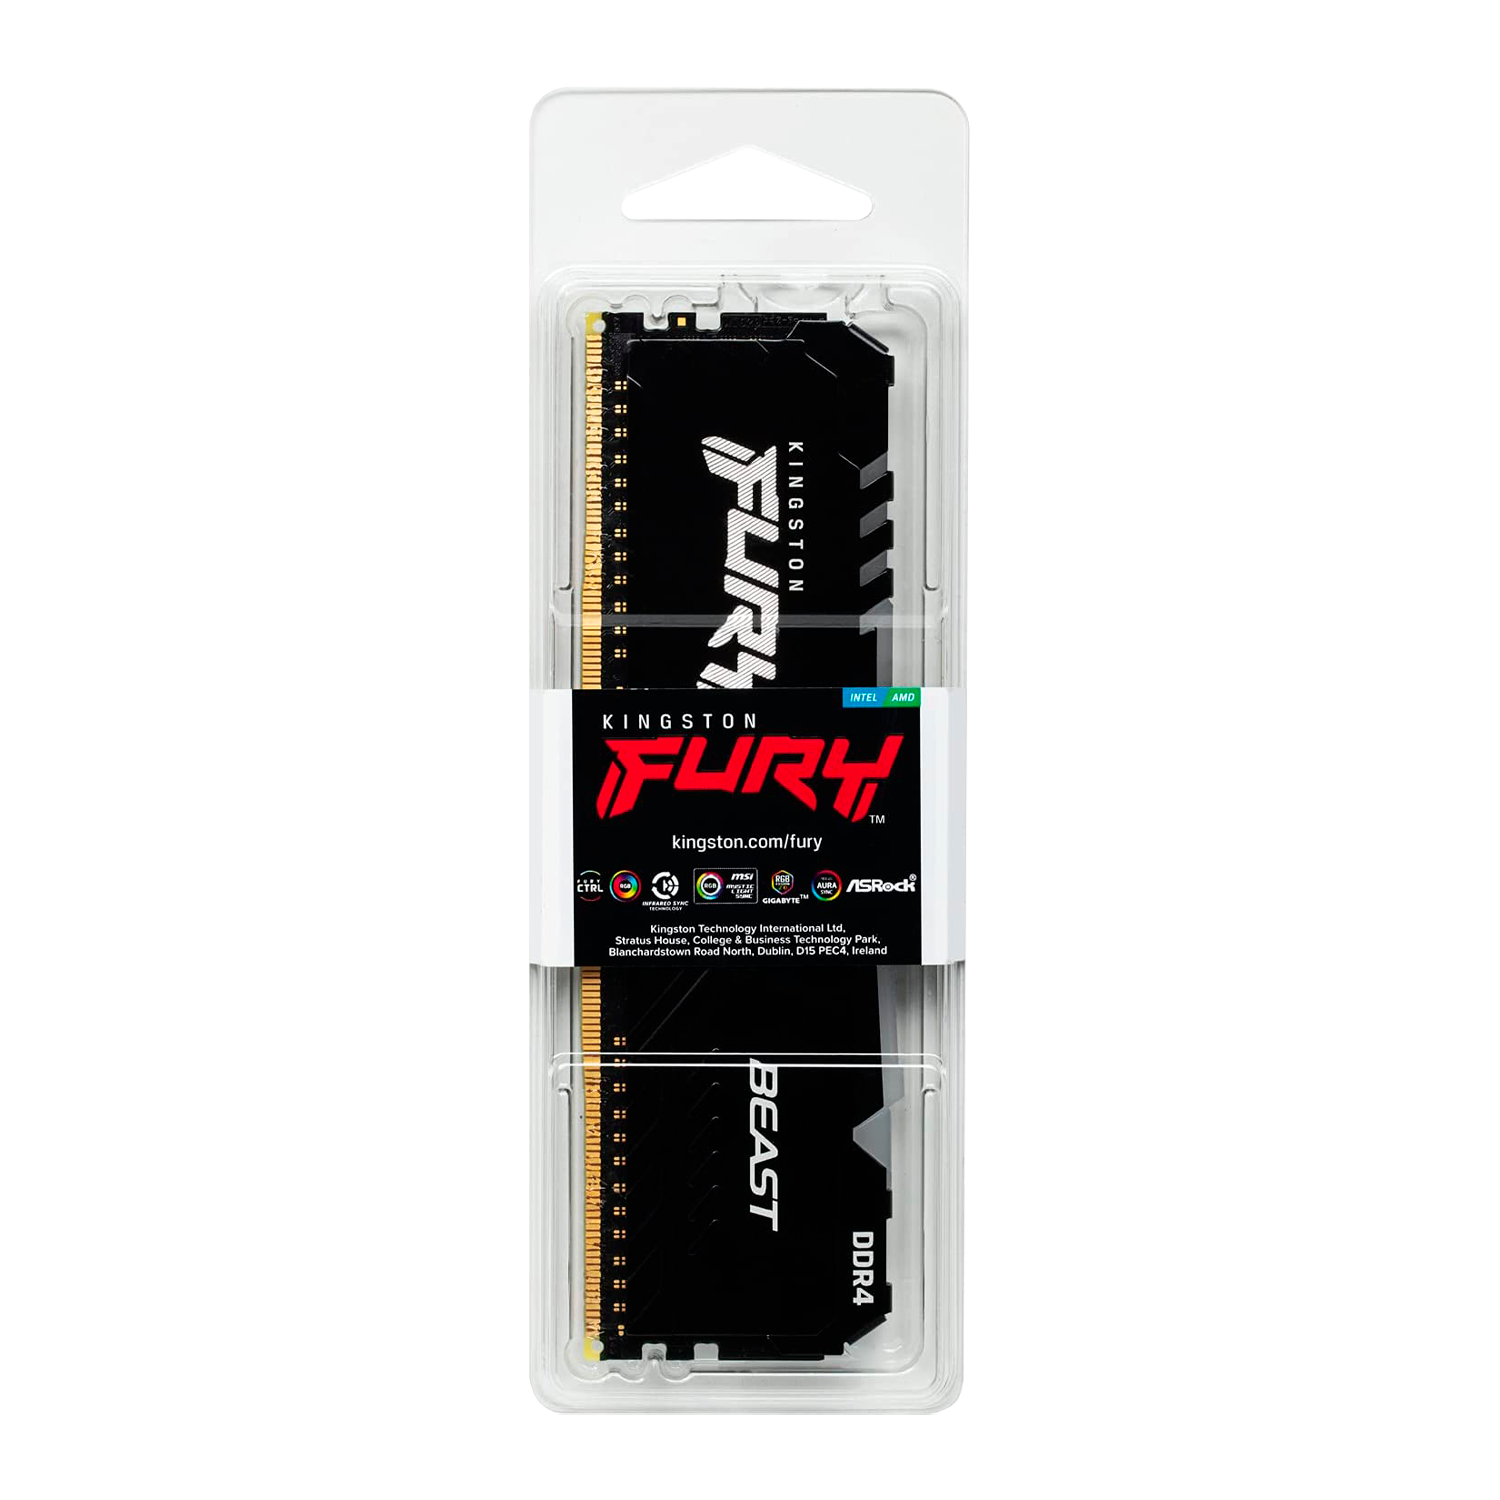 Memória RAM Kingston Fury Beast 16GB / DDR4 / 3200 MHz / RGB - (KF432C16BBA/16)